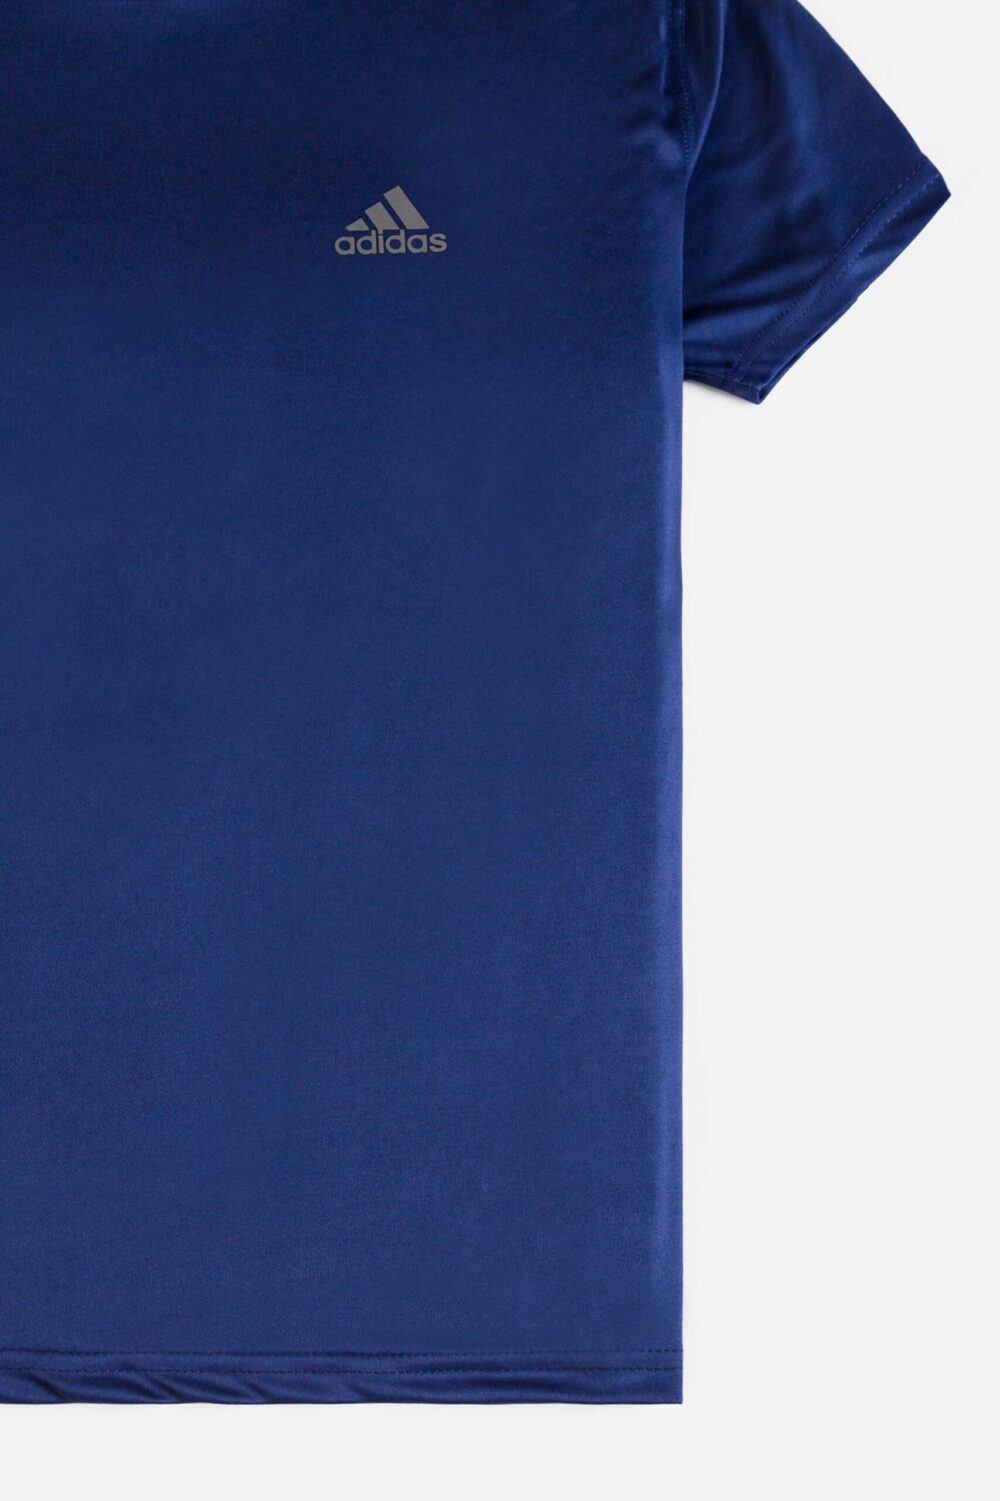 Adidas Dri-FIT  T-Shirt Navy Blue